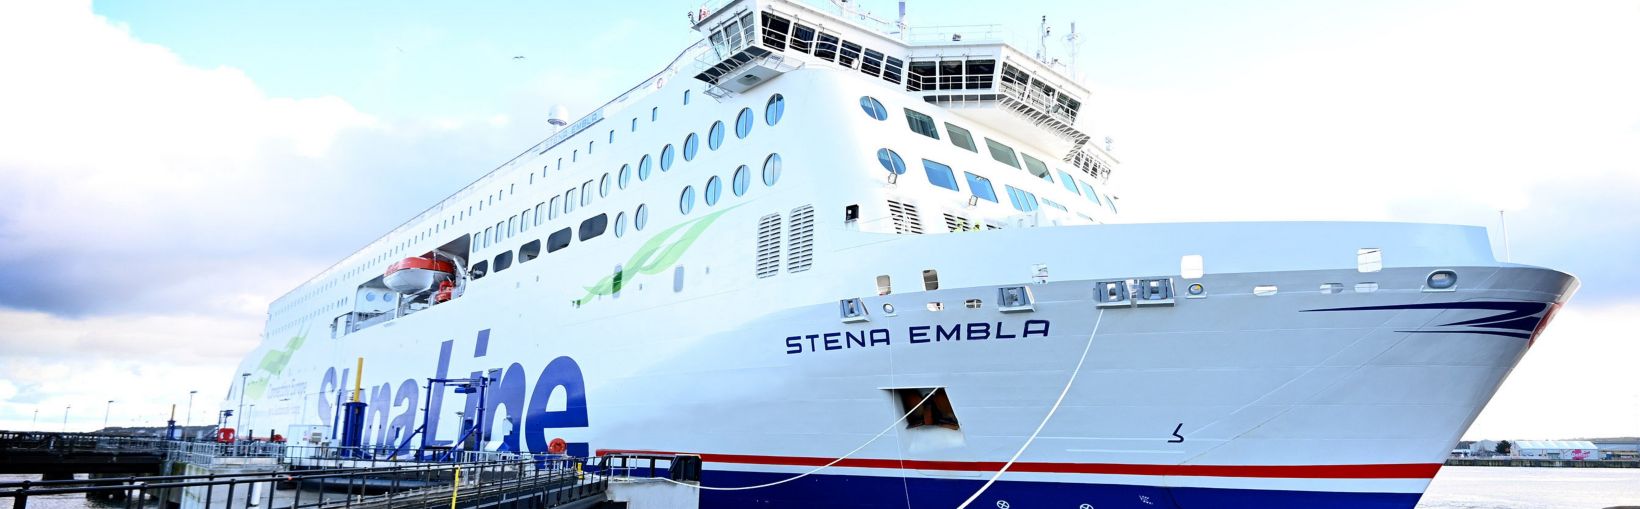 Stena Embla -lautta telakoitui Liverpoolin satamaan